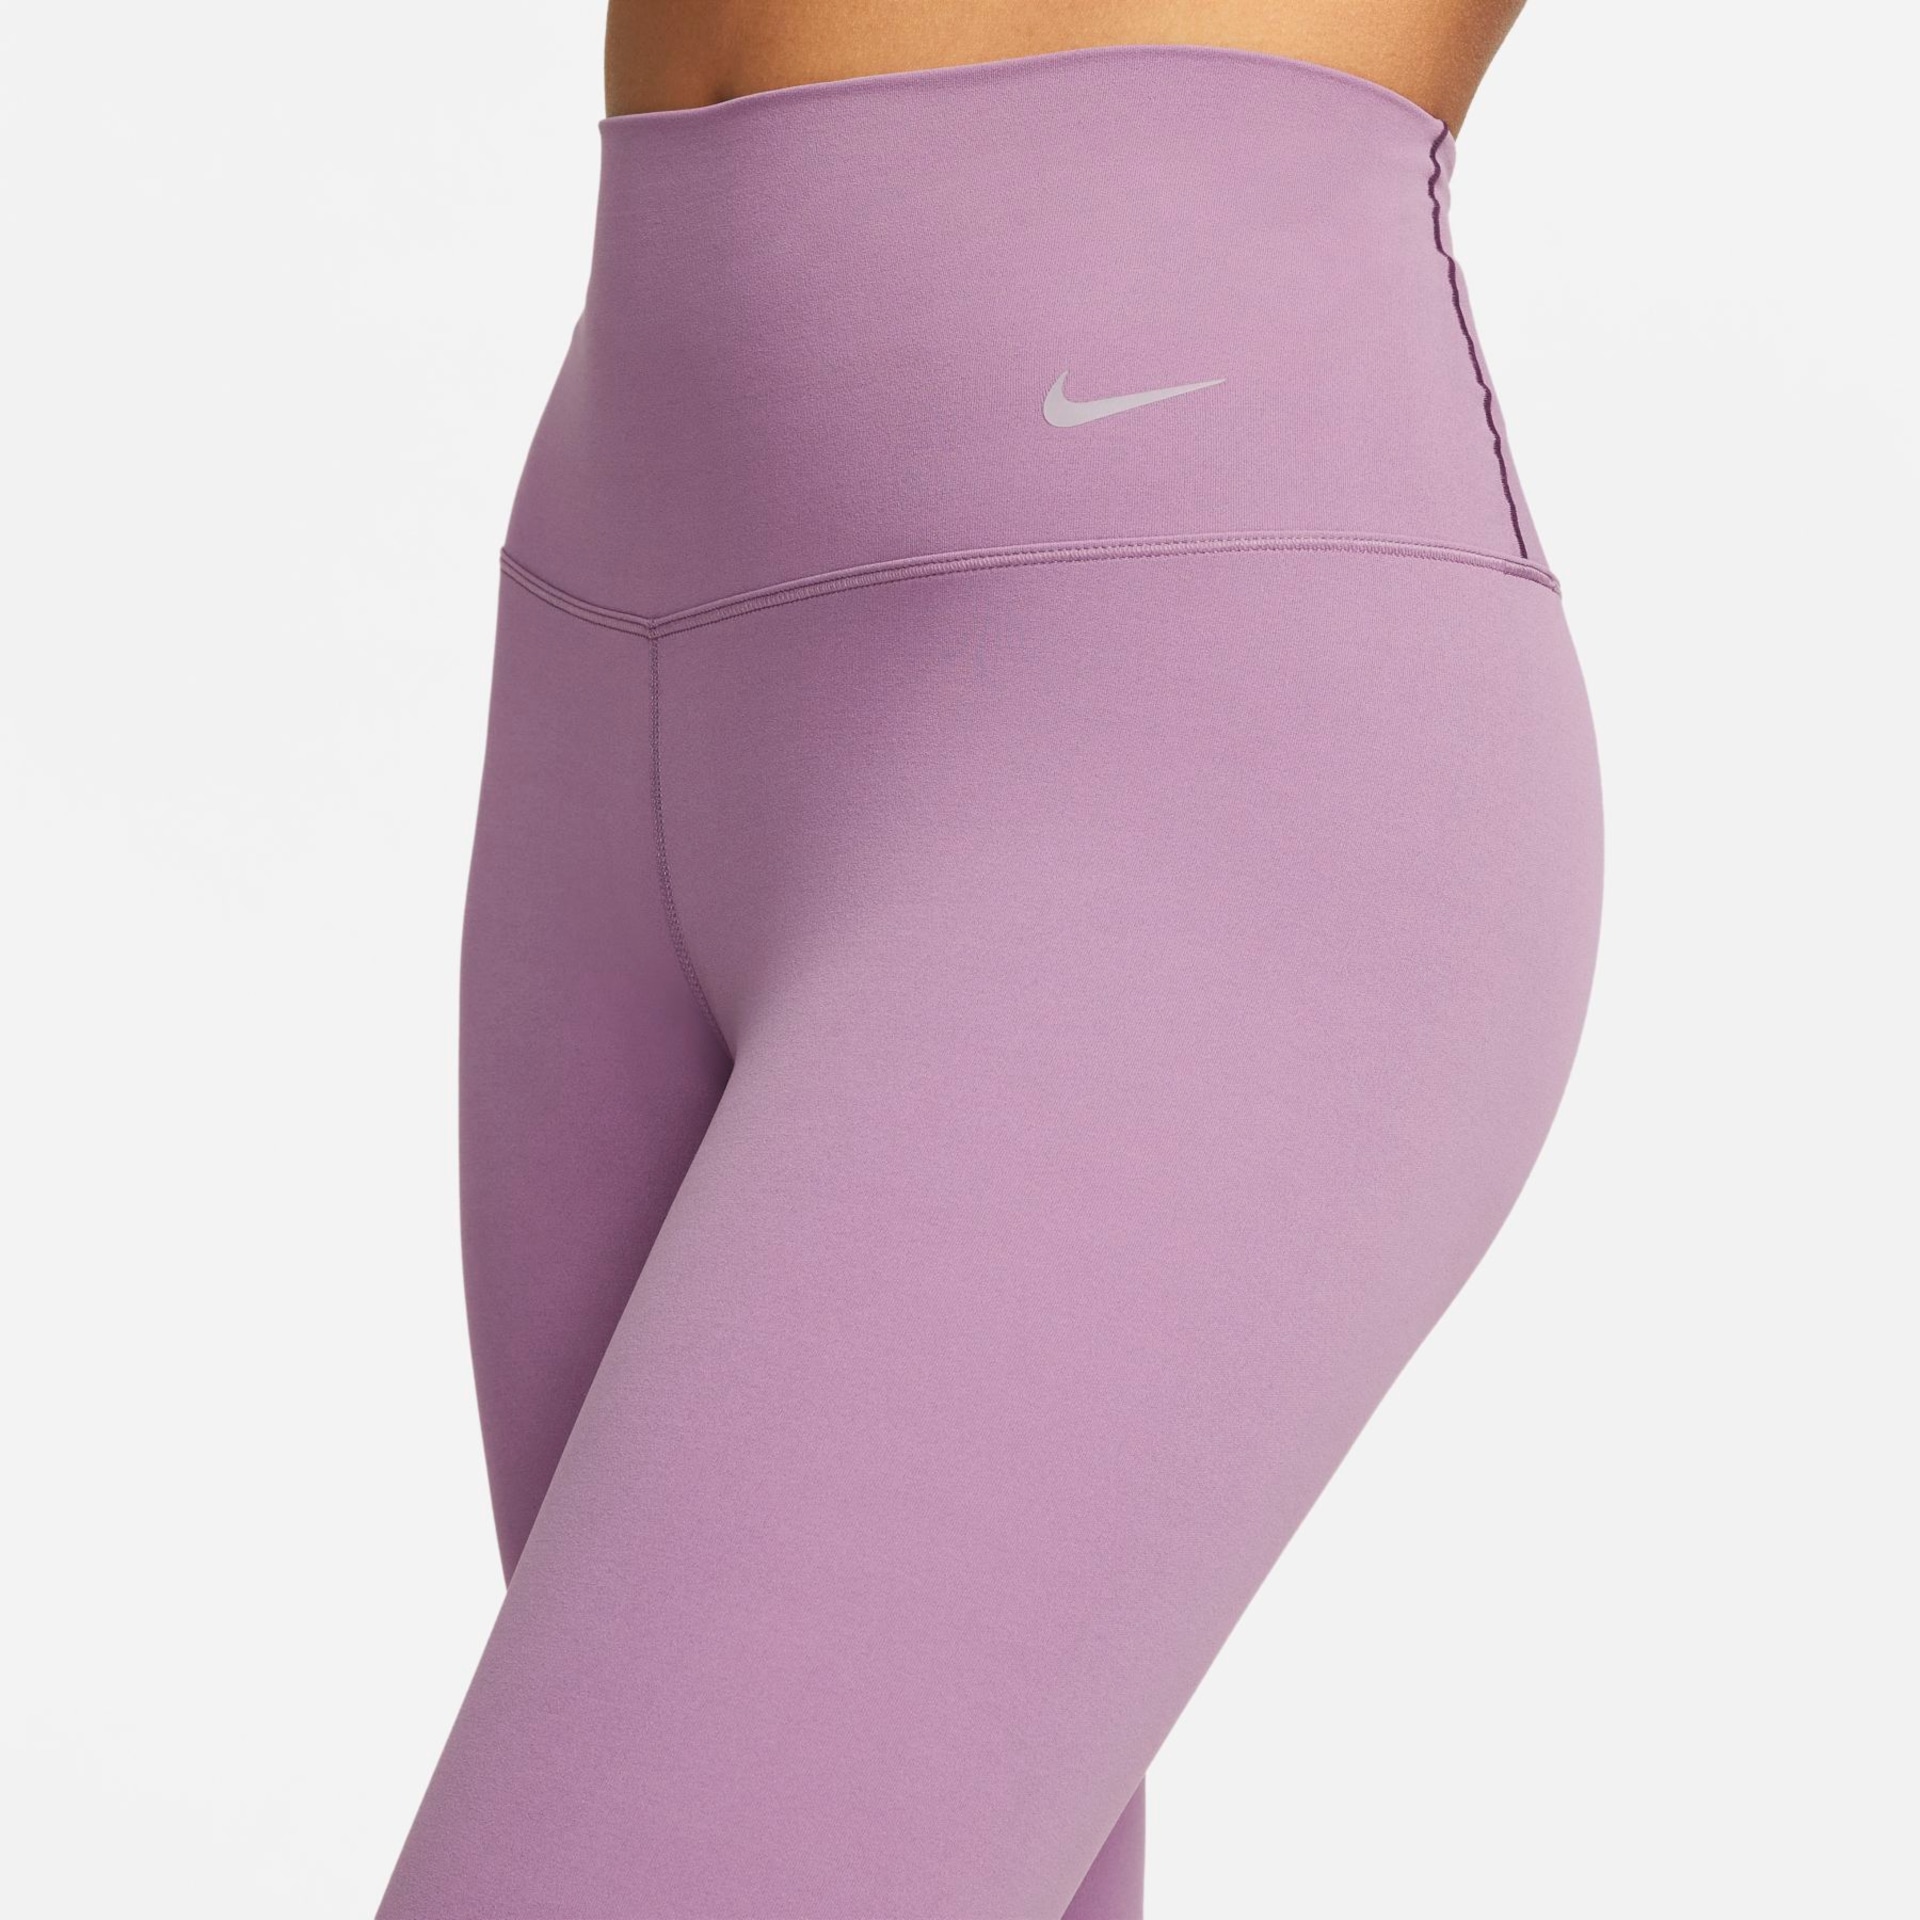 Legging Nike Zenvy Feminina - Foto 4